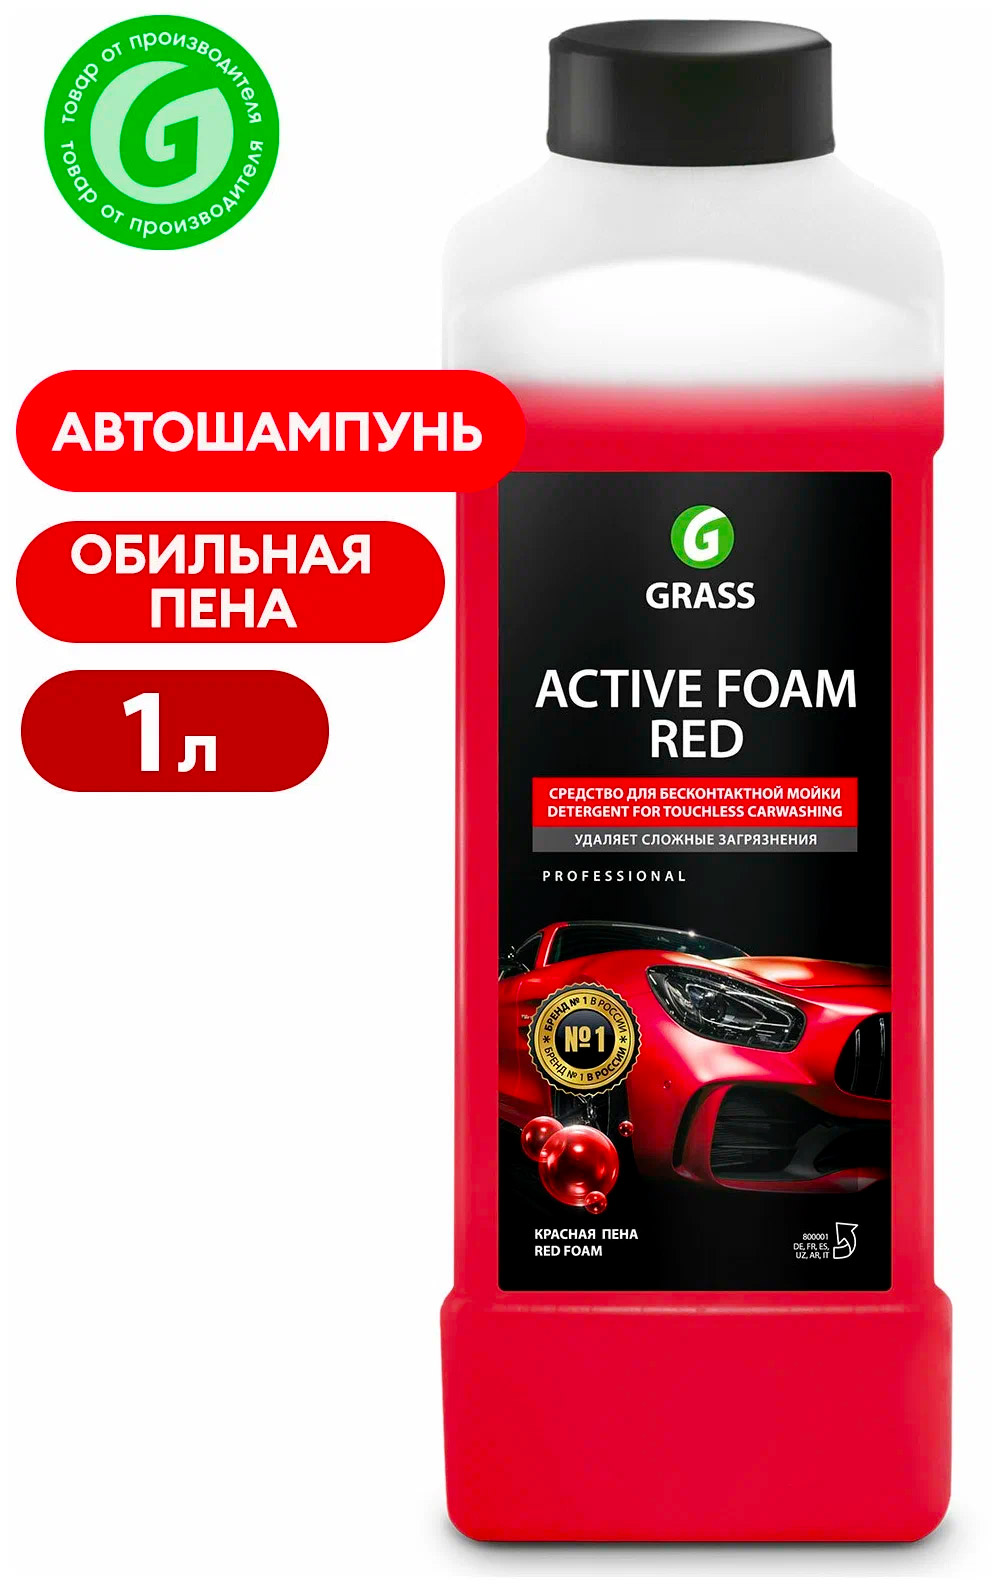 Активная пена GRASS "Active Foam Red" 1л.800001